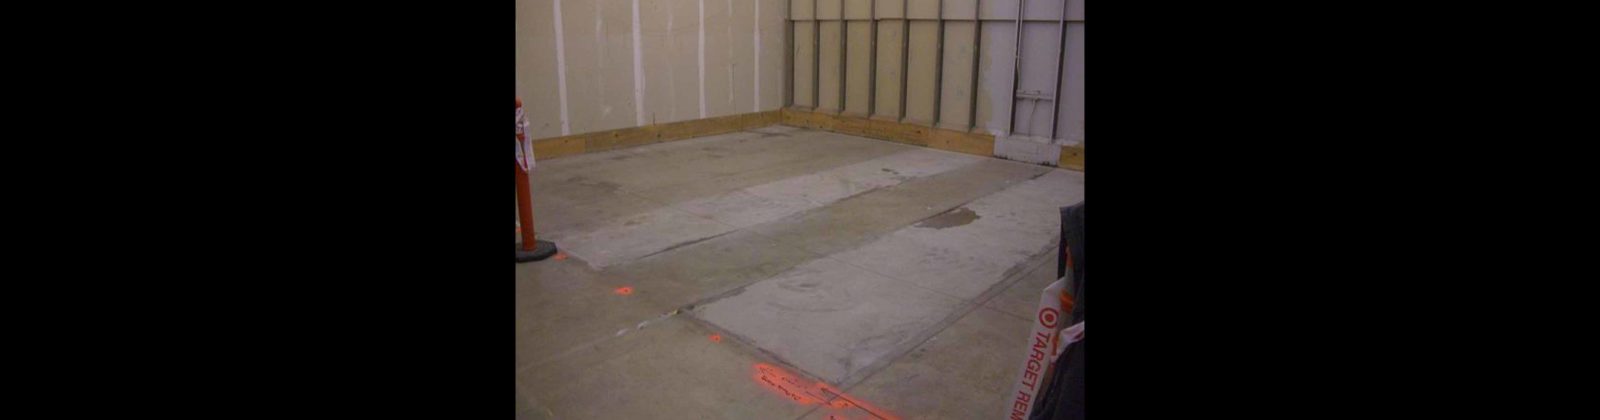 Concrete Scanning 20 x 25 ft Room to Avoid Rebar